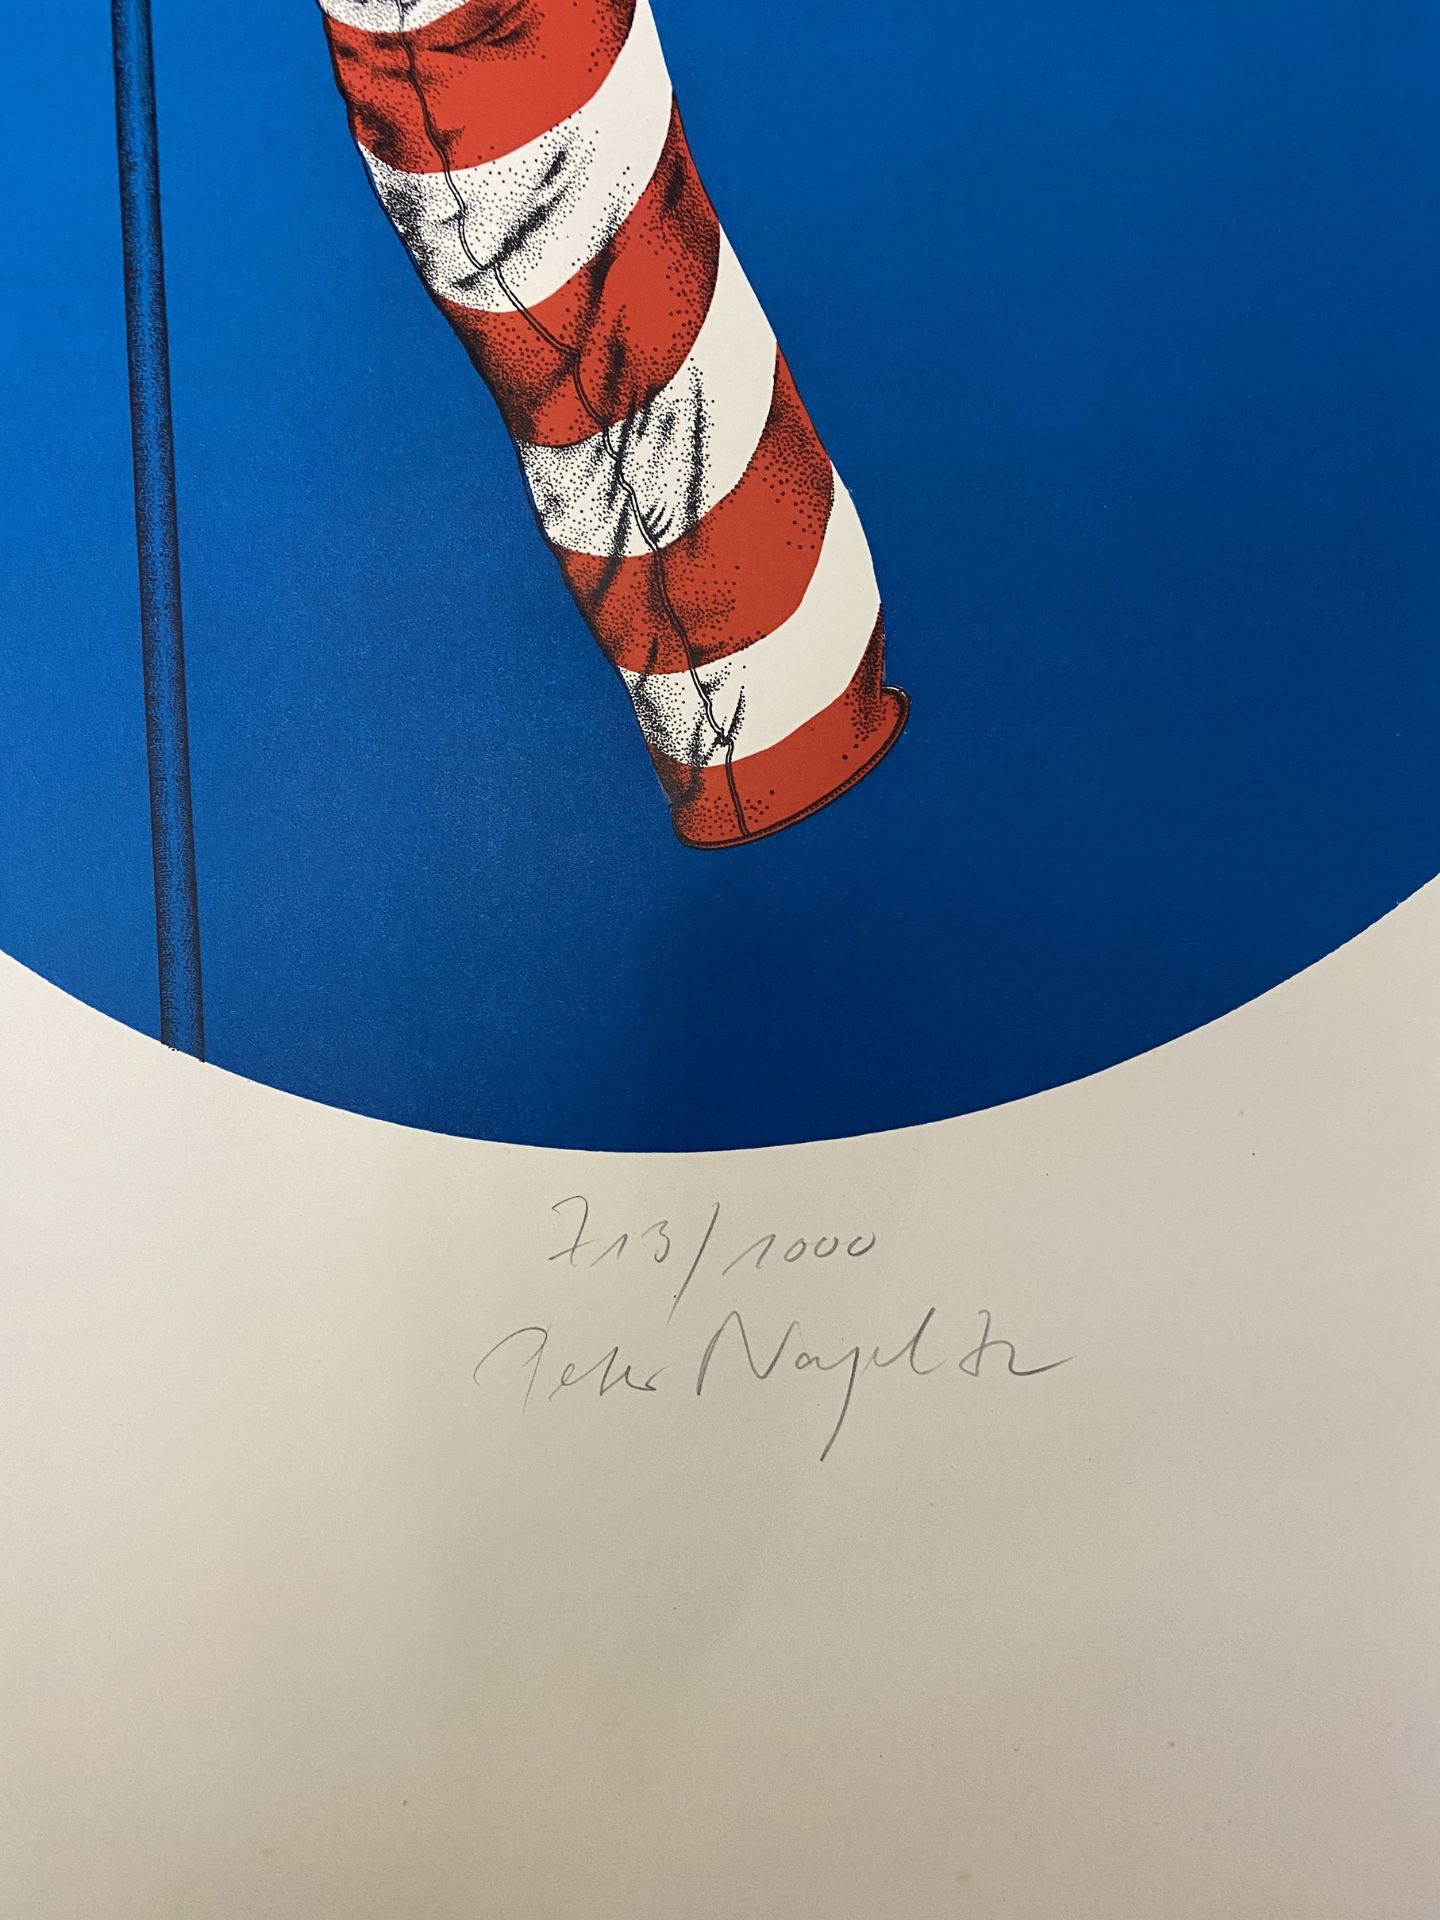 Peter Nagel Farbserigrafie auf Papier "Wind" - Image 2 of 2